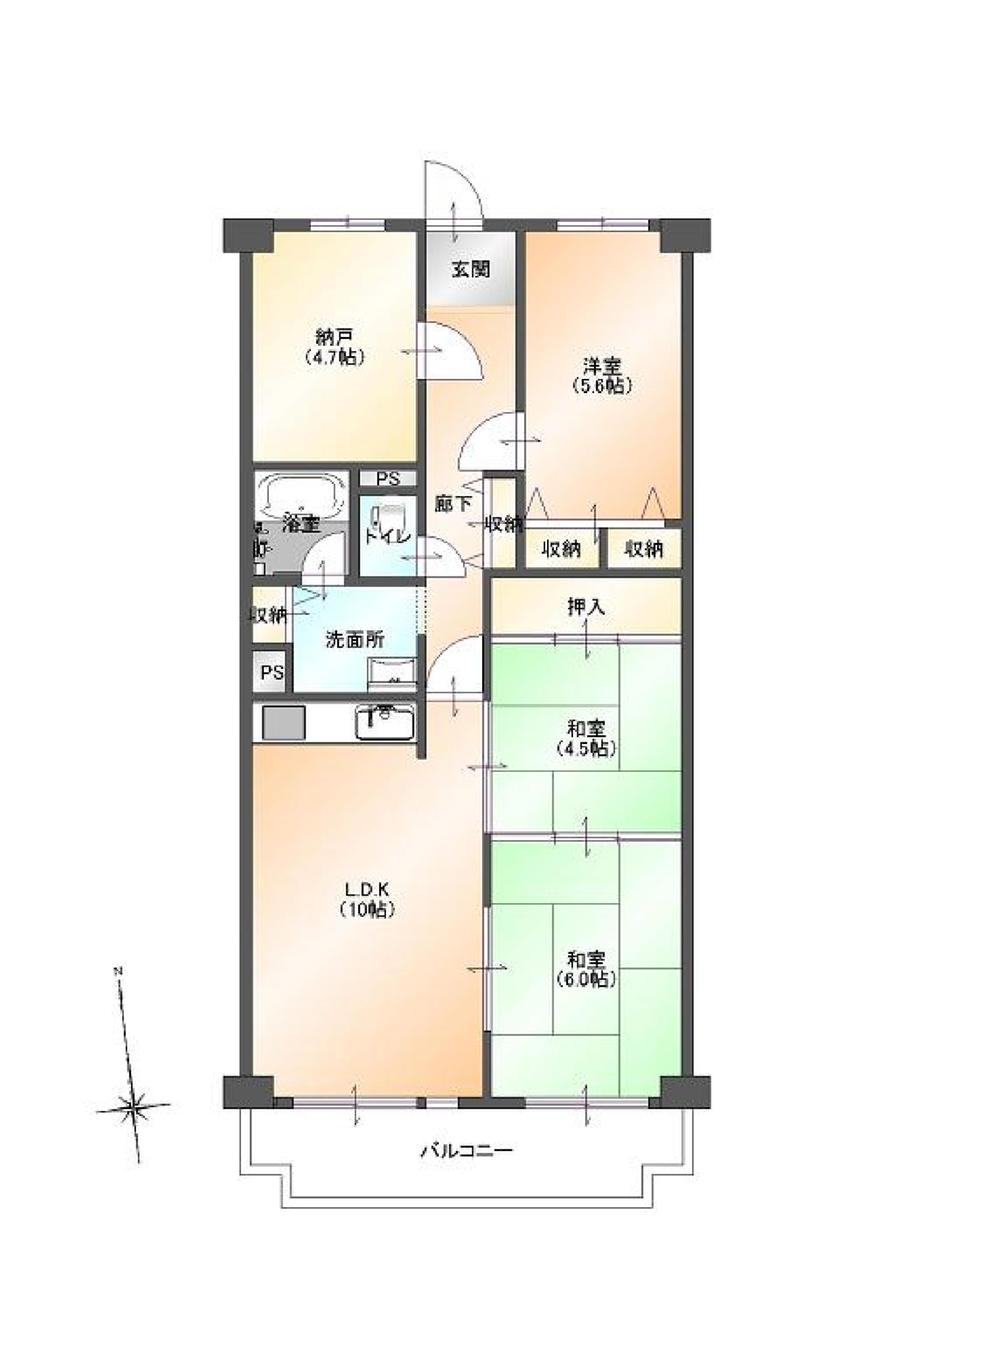 Floor plan. 3LDK + S (storeroom), Price 9.99 million yen, Footprint 72 sq m , Balcony area 8.1 sq m